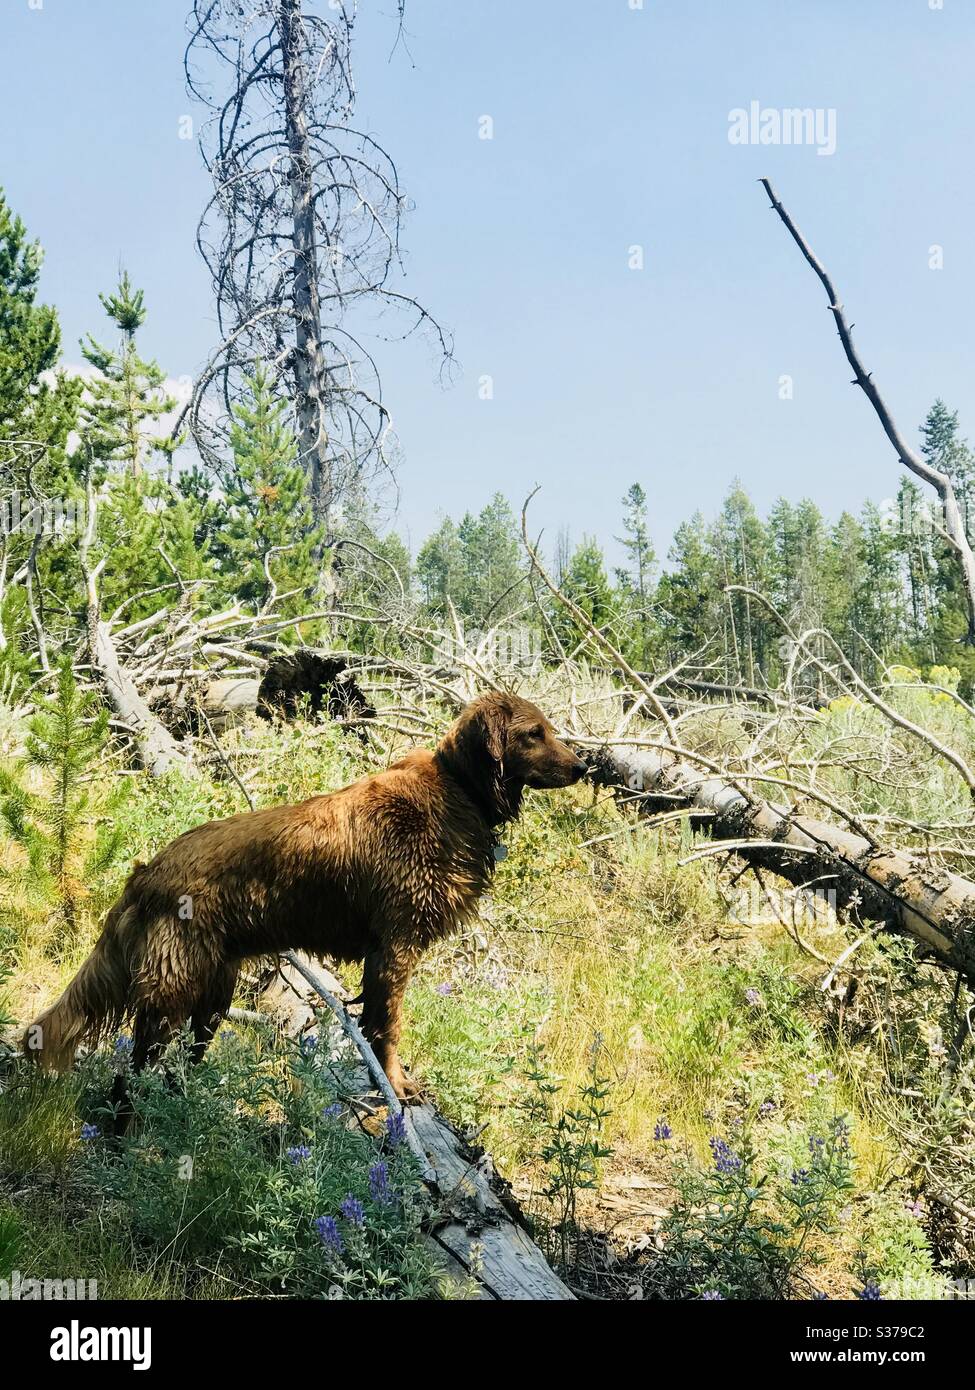 A wet golden retriever dog standing on a log exploring the mountains. Stock Photo